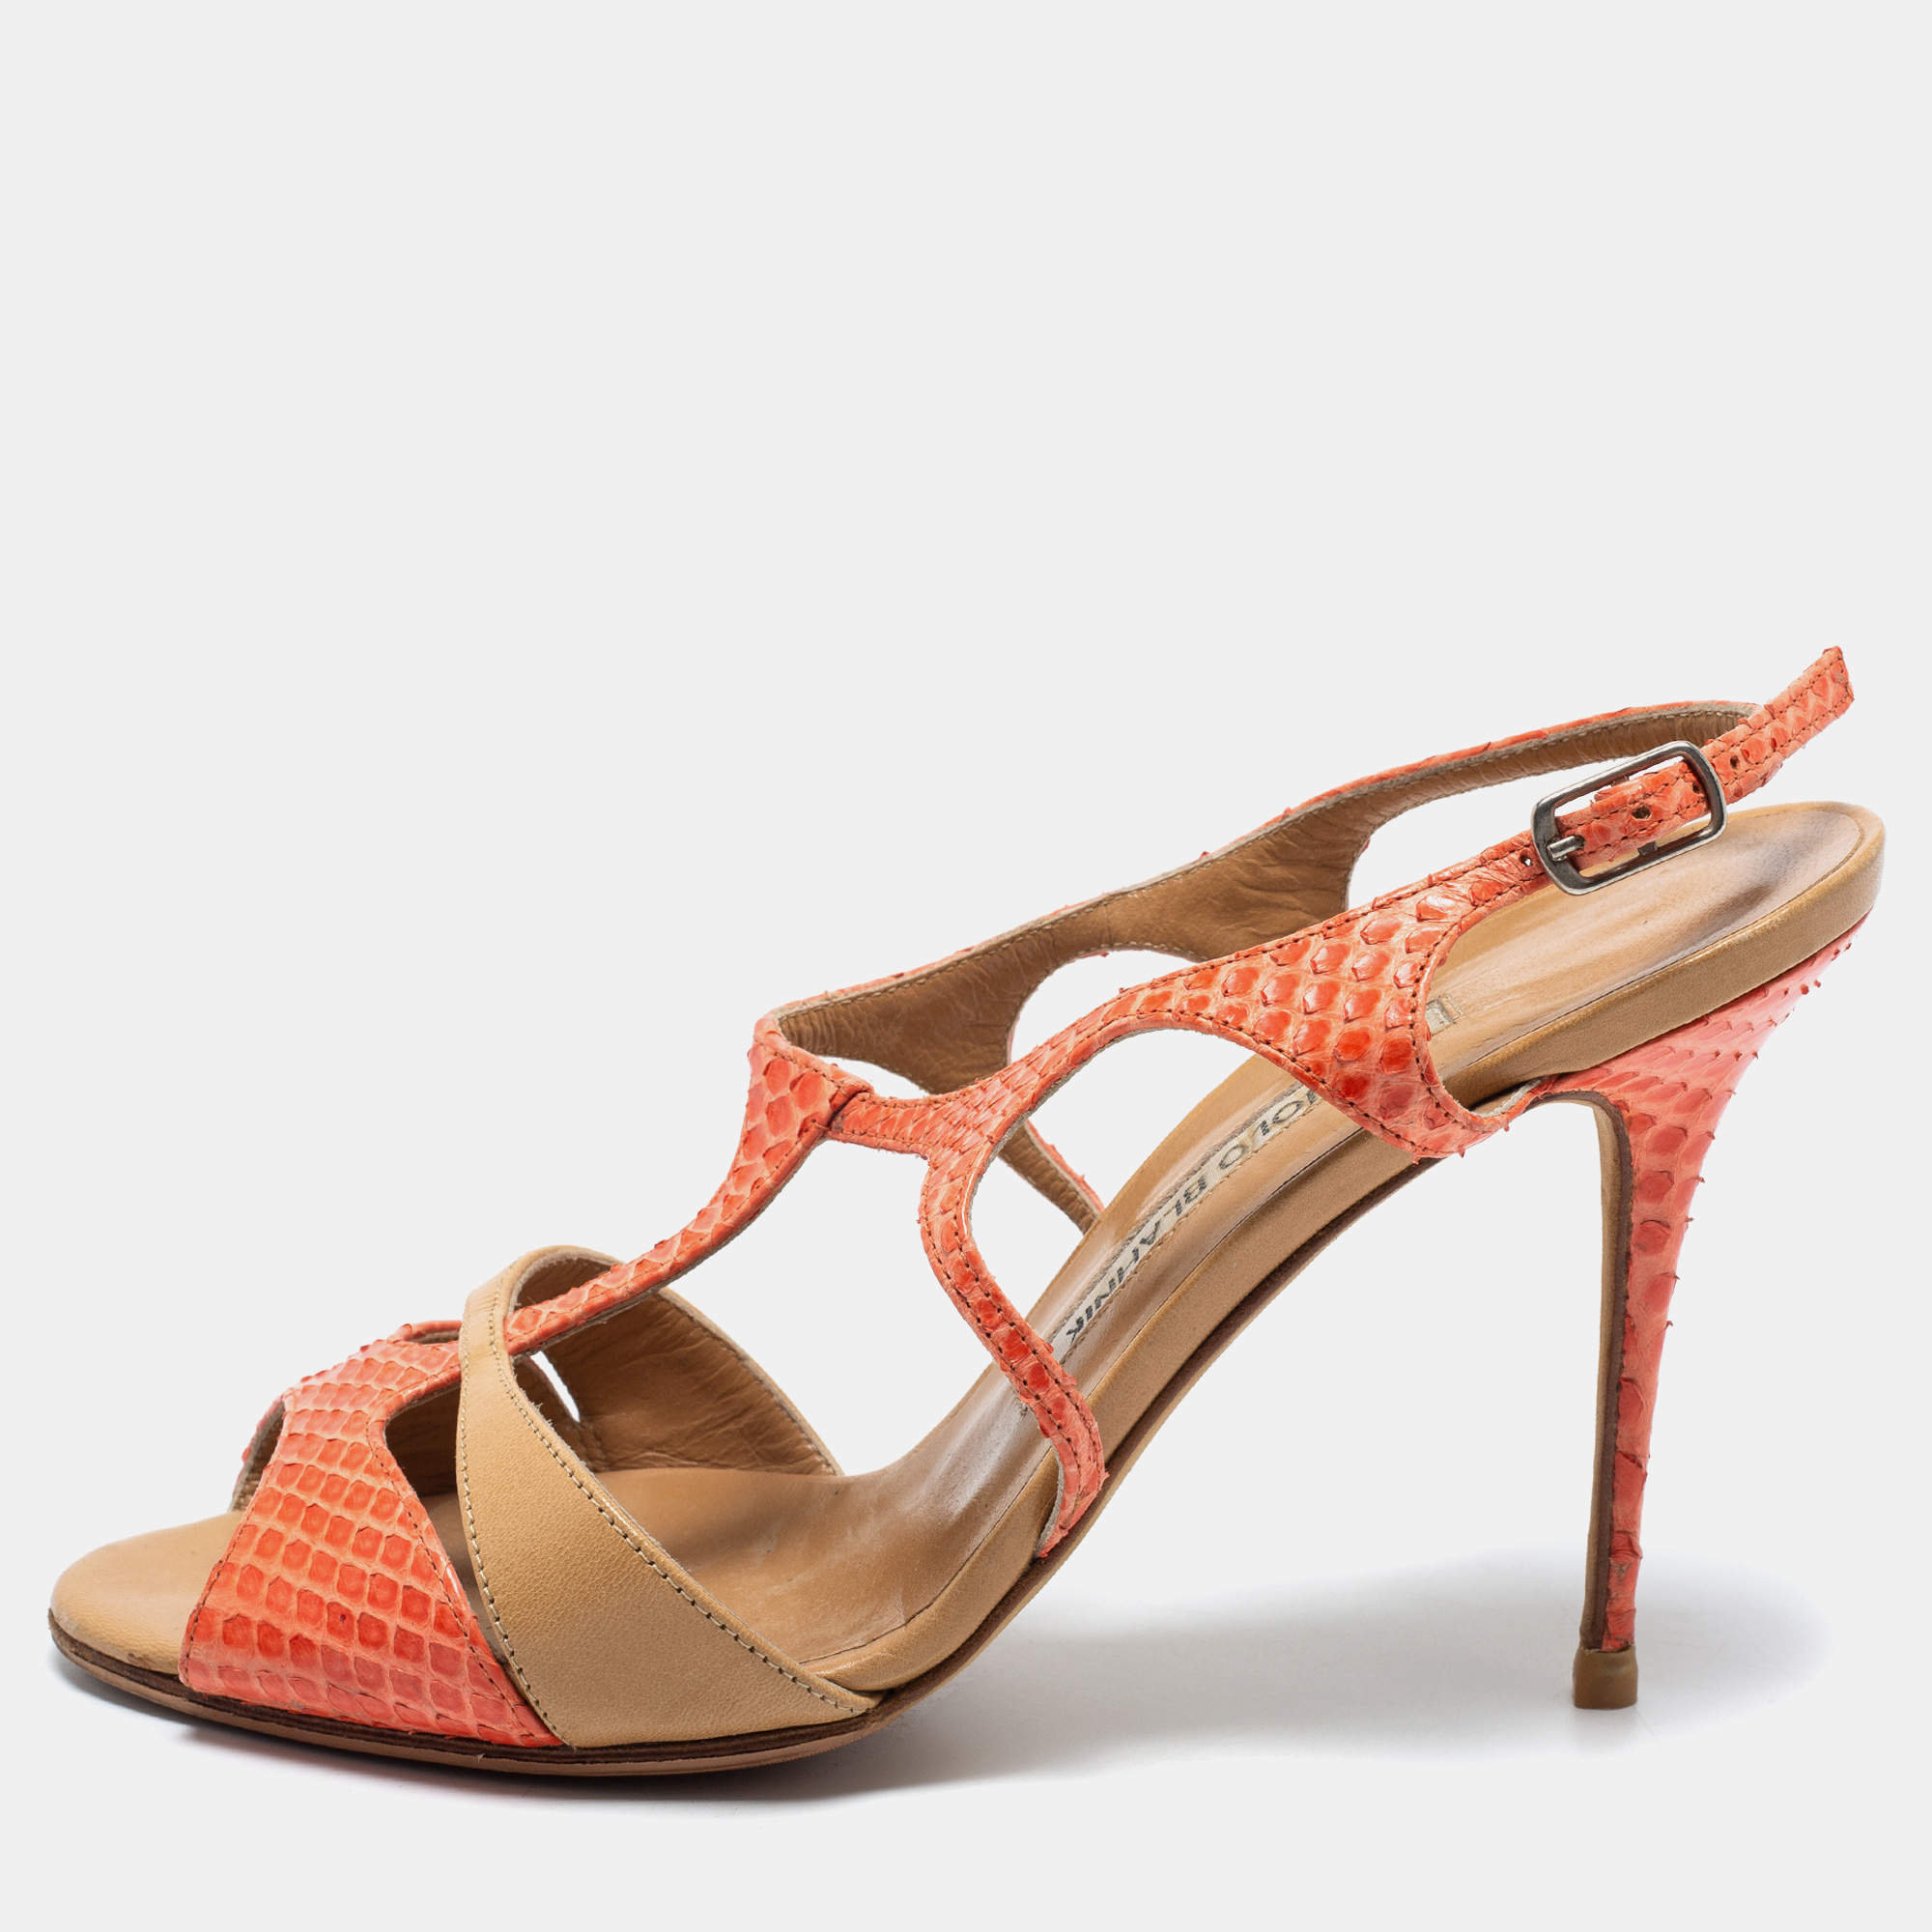 Manolo Blahnik Pink/Beige Snakeskin and Leather Slingback Sandals Size 36.5